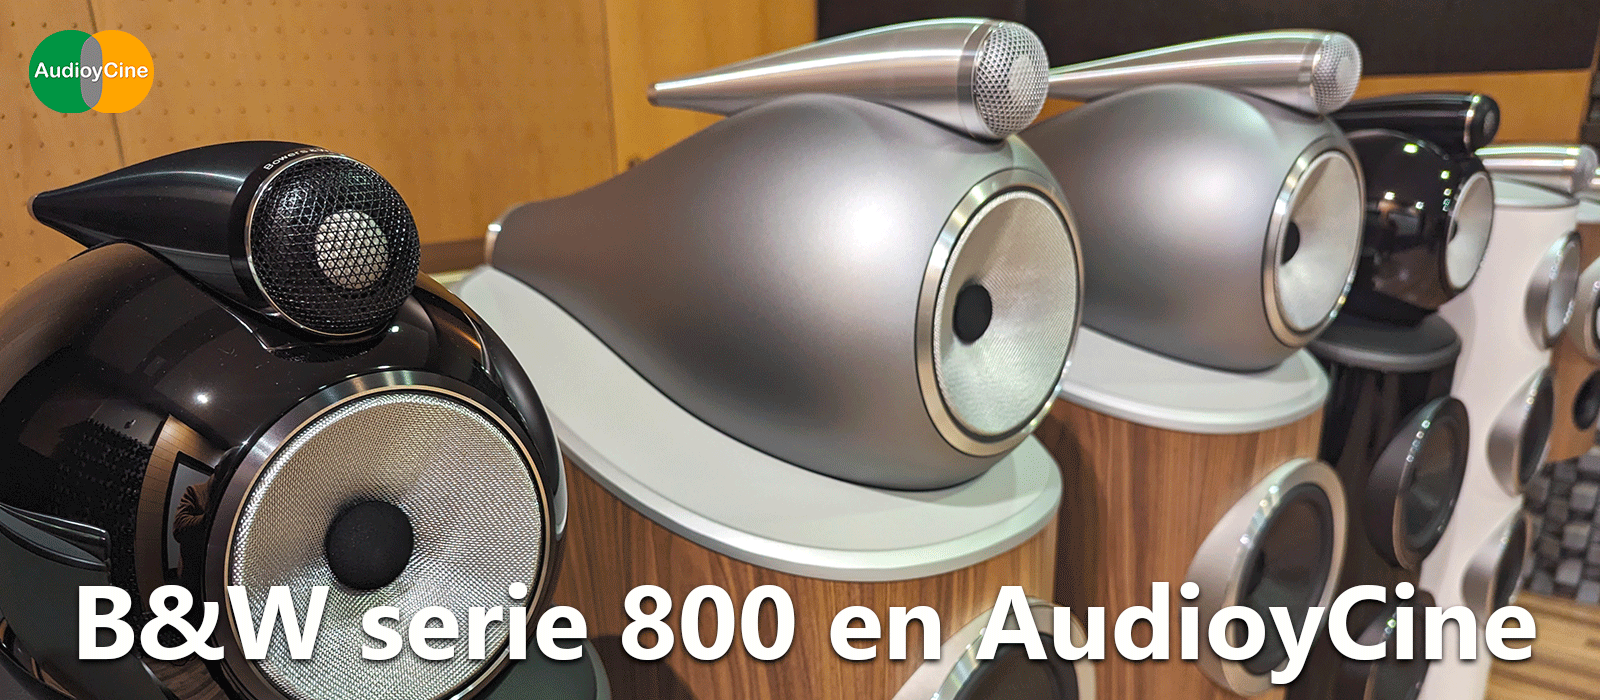 altavoces-B&W-serie-800-en-AudioyCine